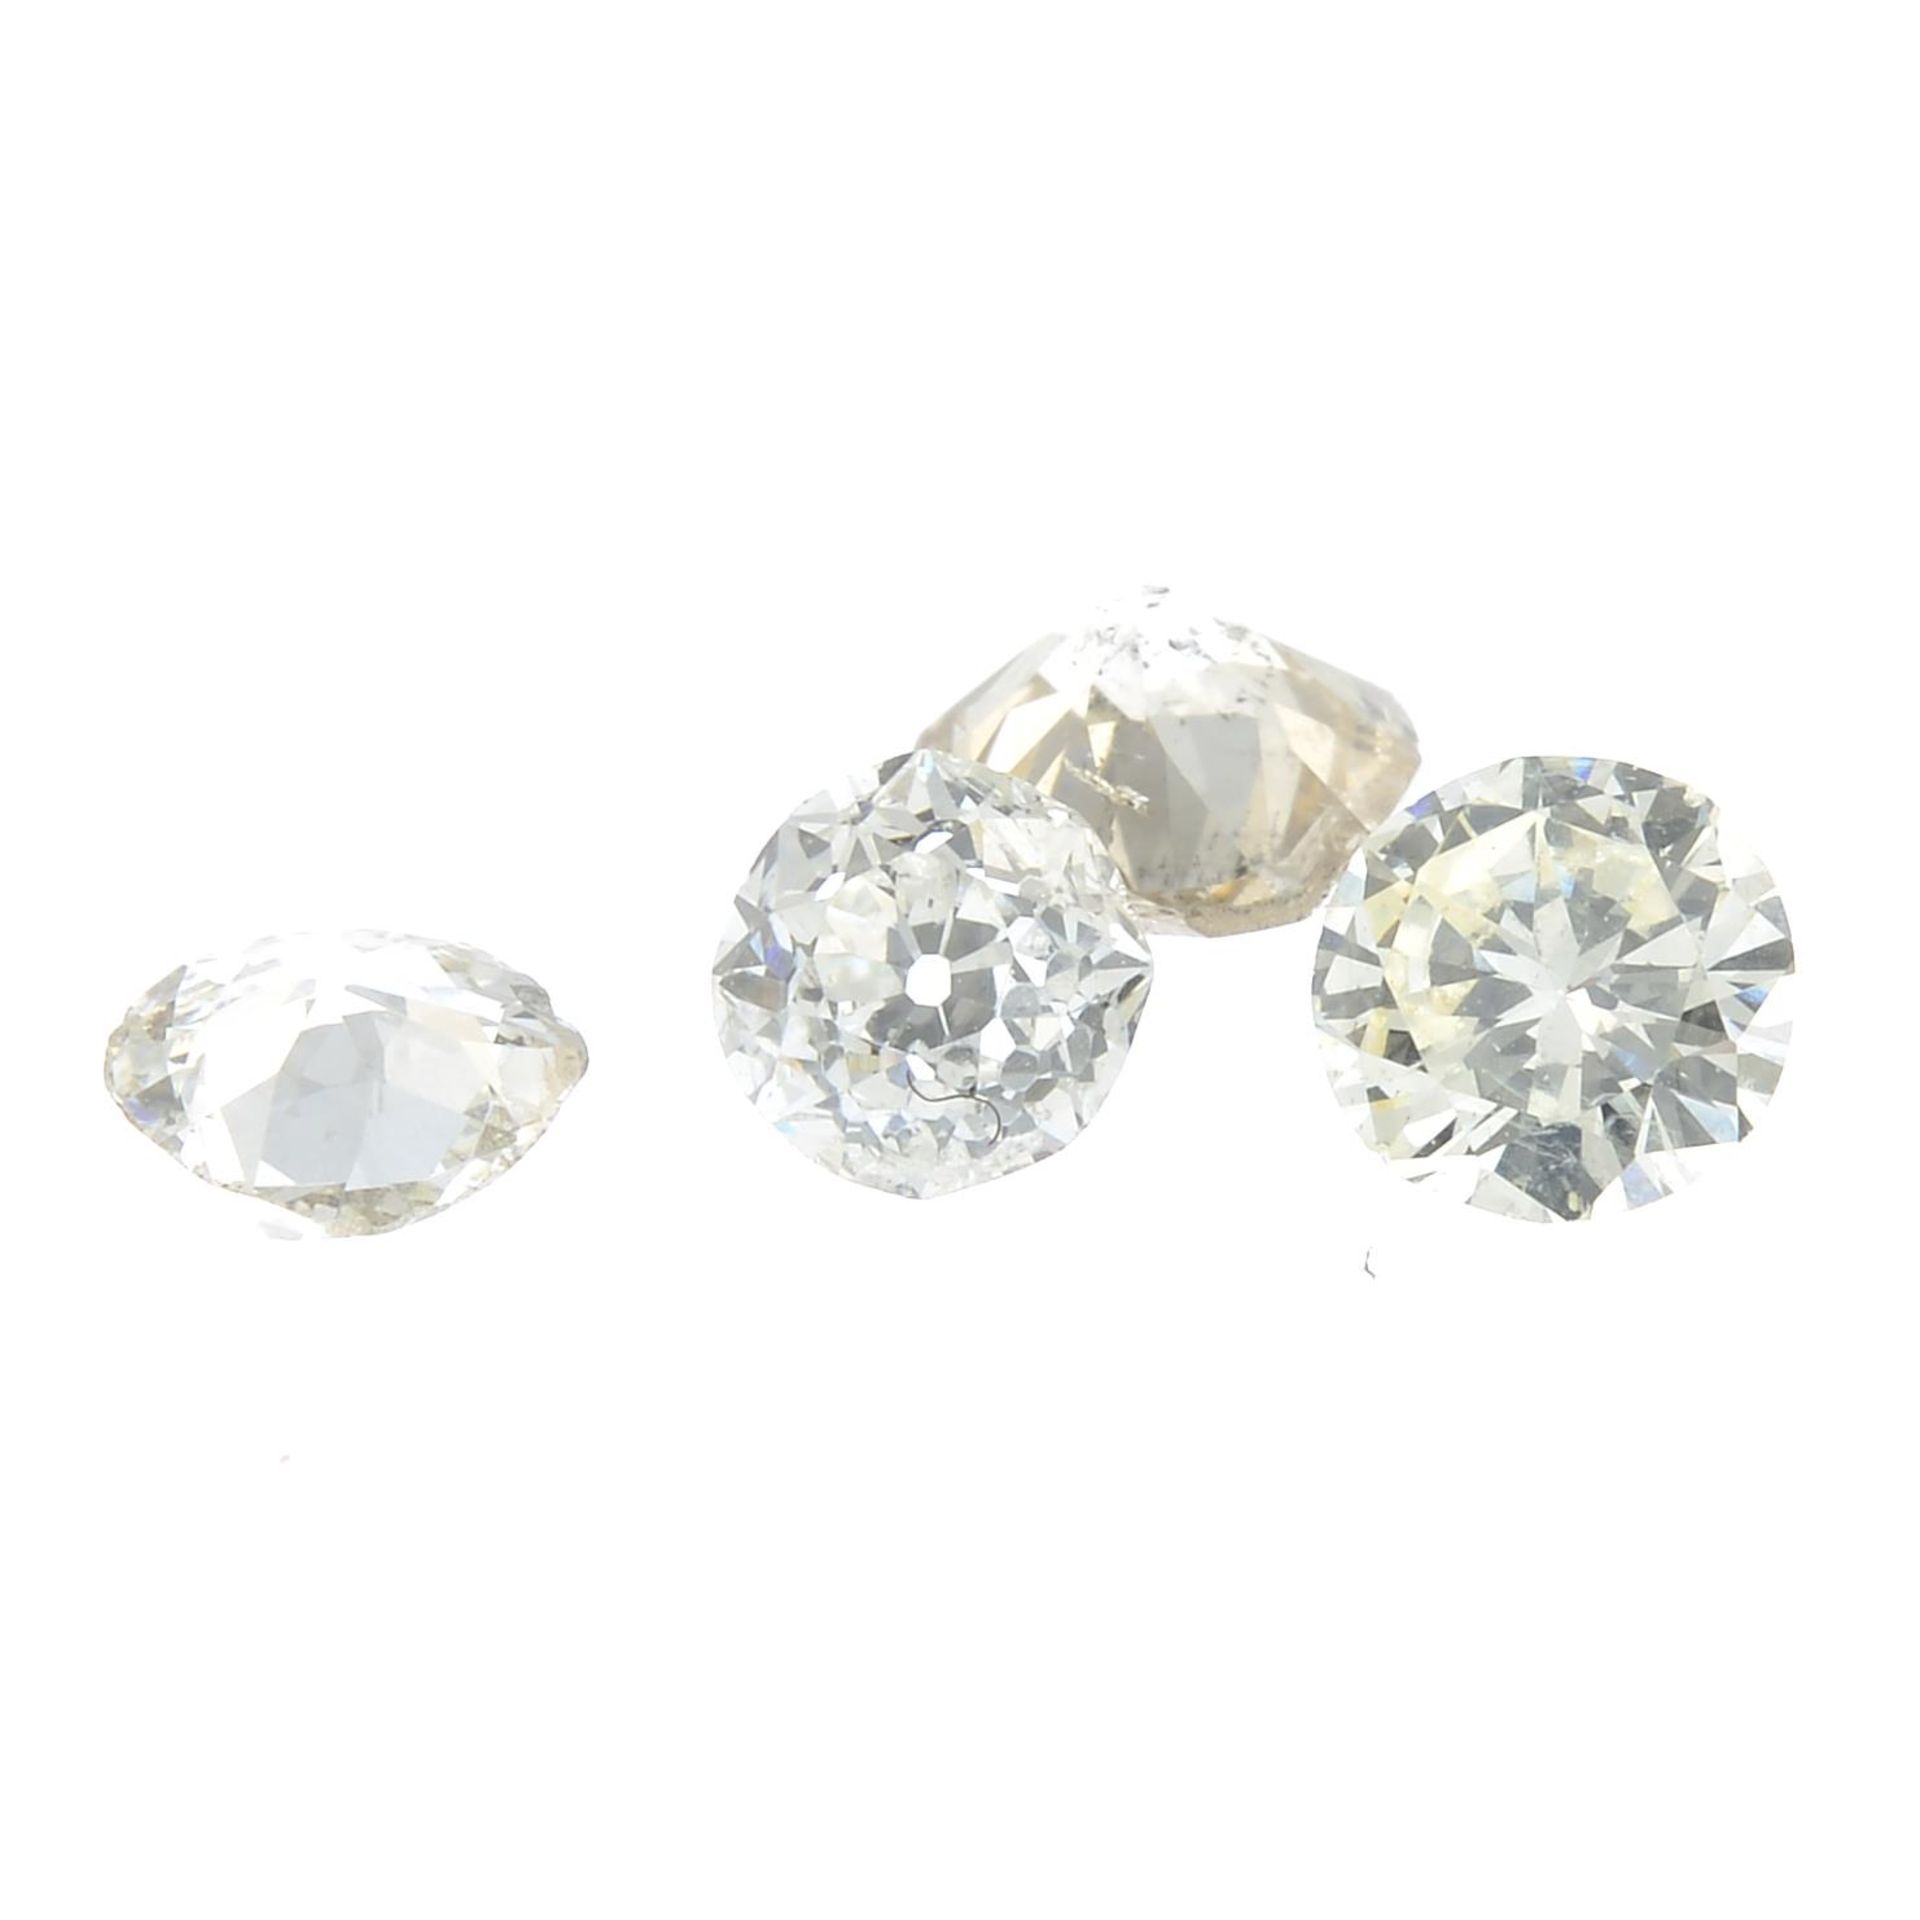 Four old-cut diamonds. - Image 2 of 2